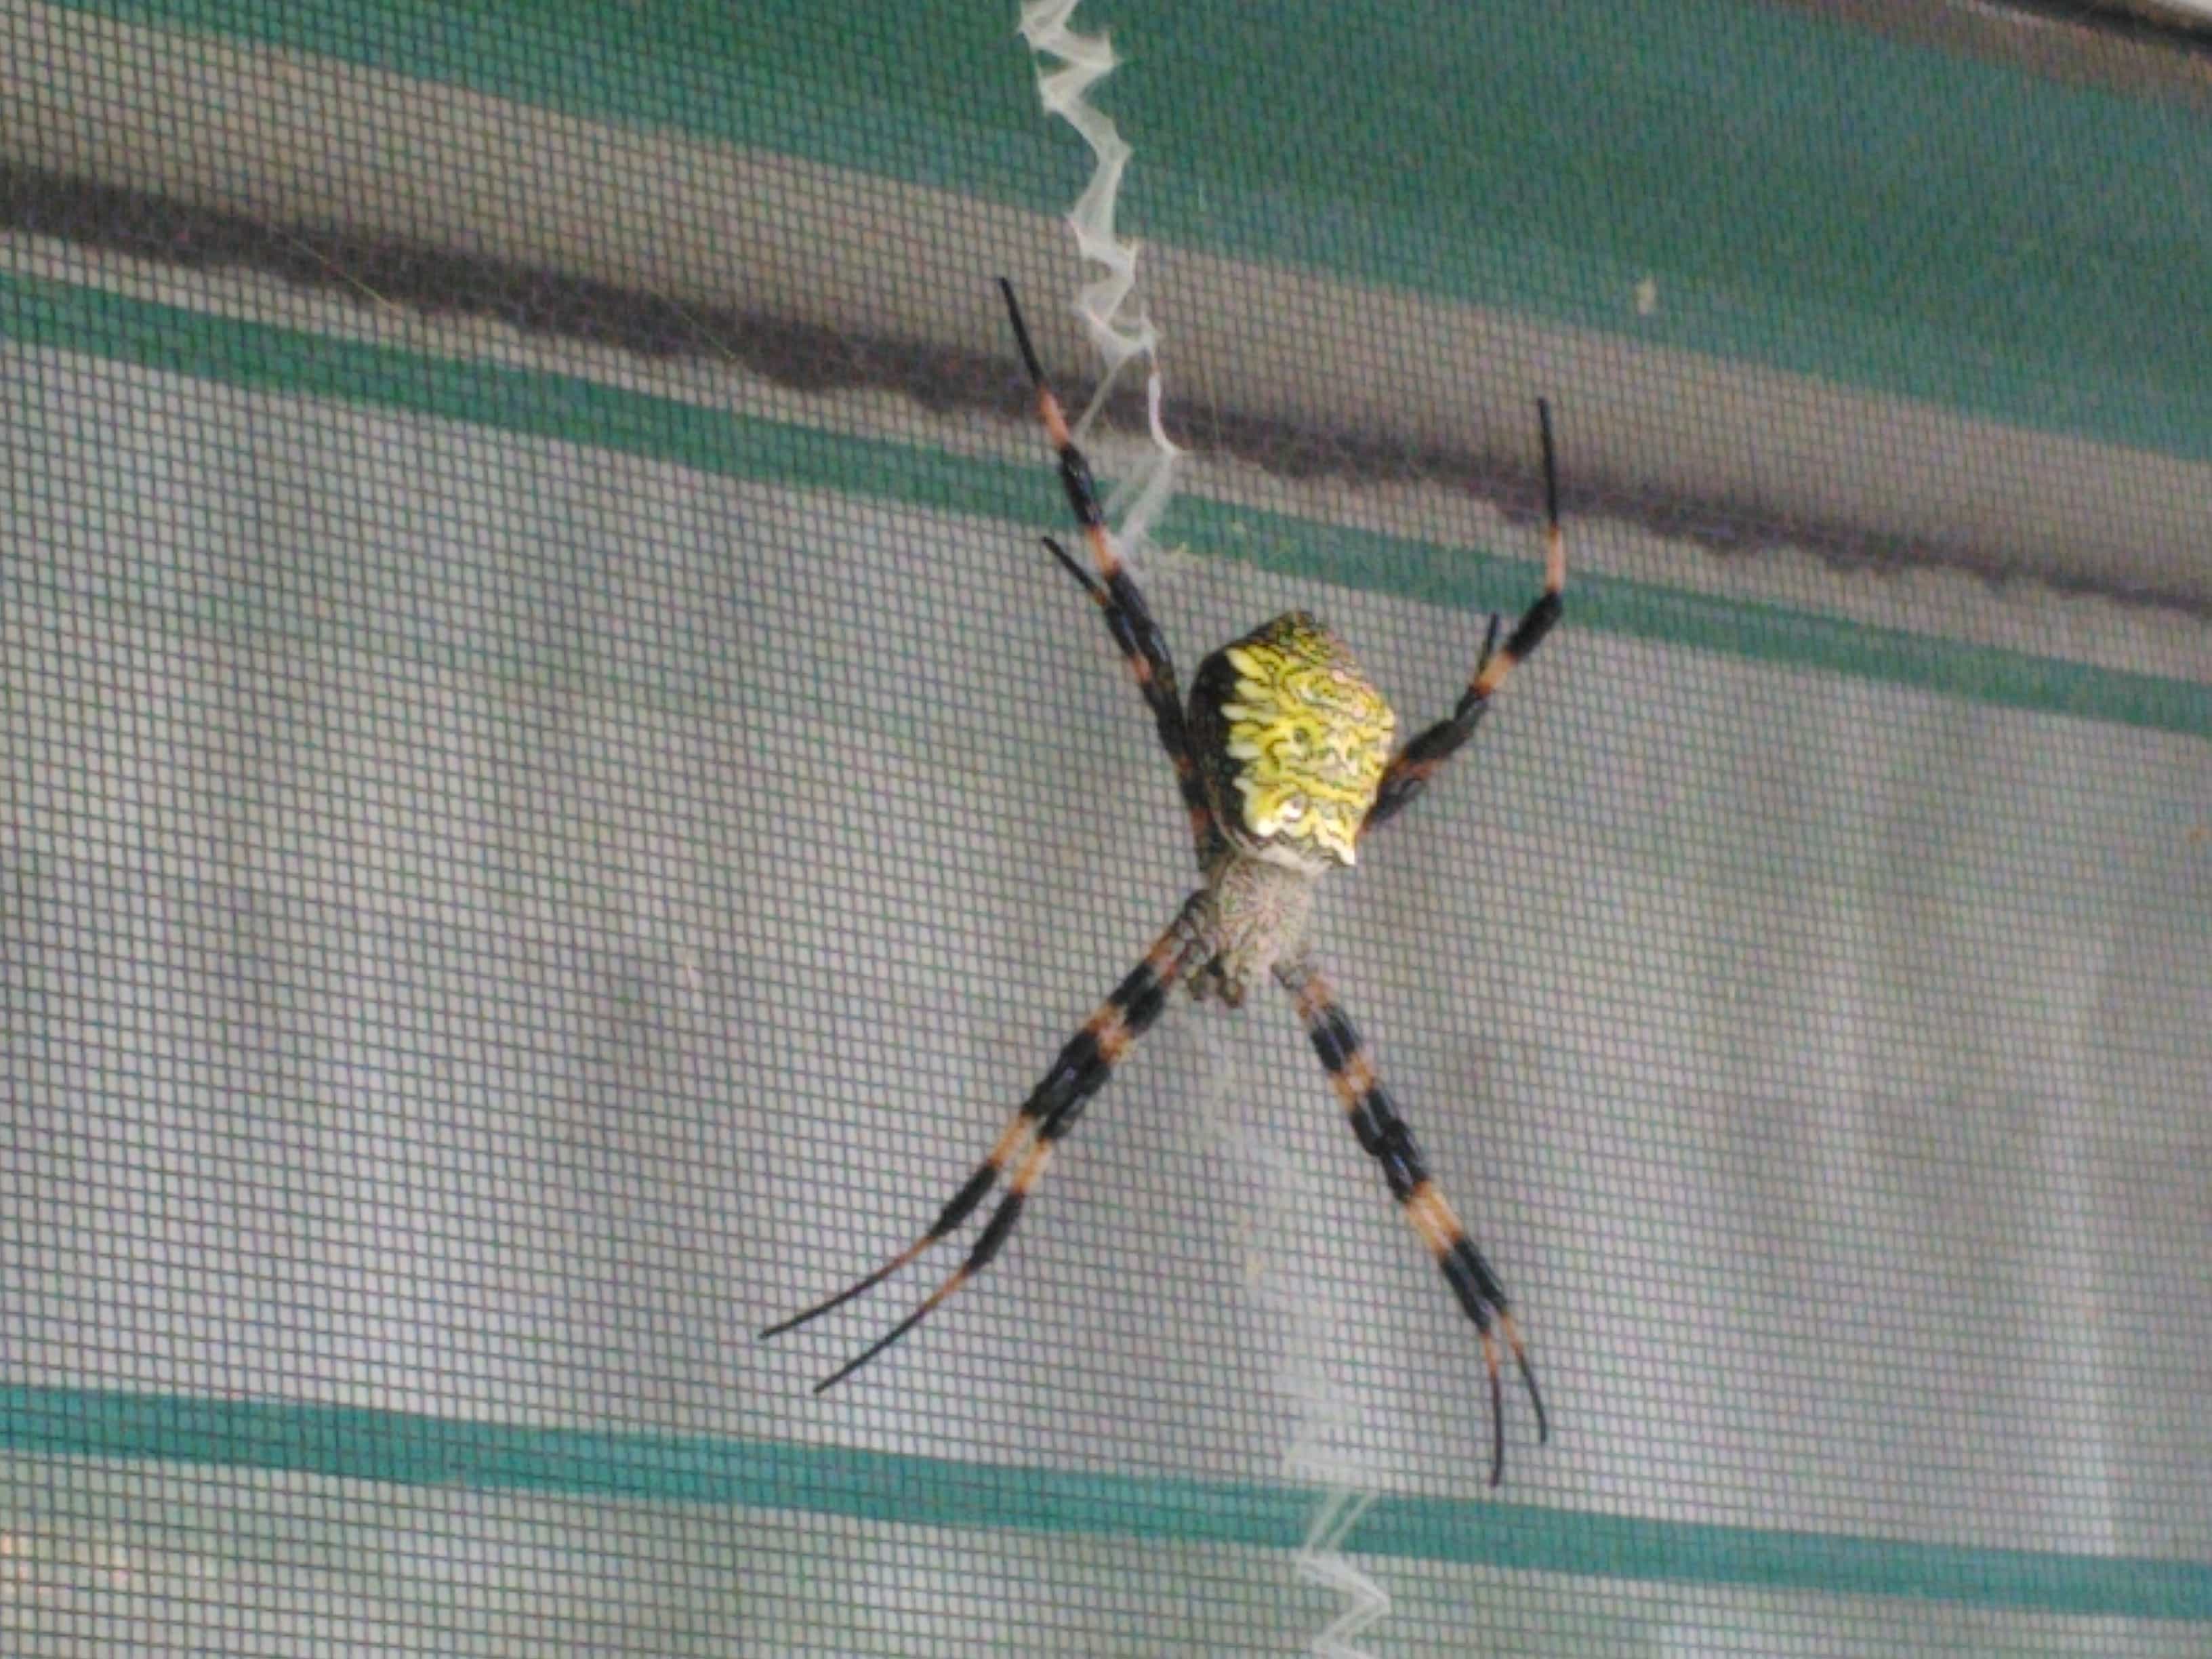 Picture of Argiope appensa (Hawaiian Garden Spider) - Female - Dorsal,Webs